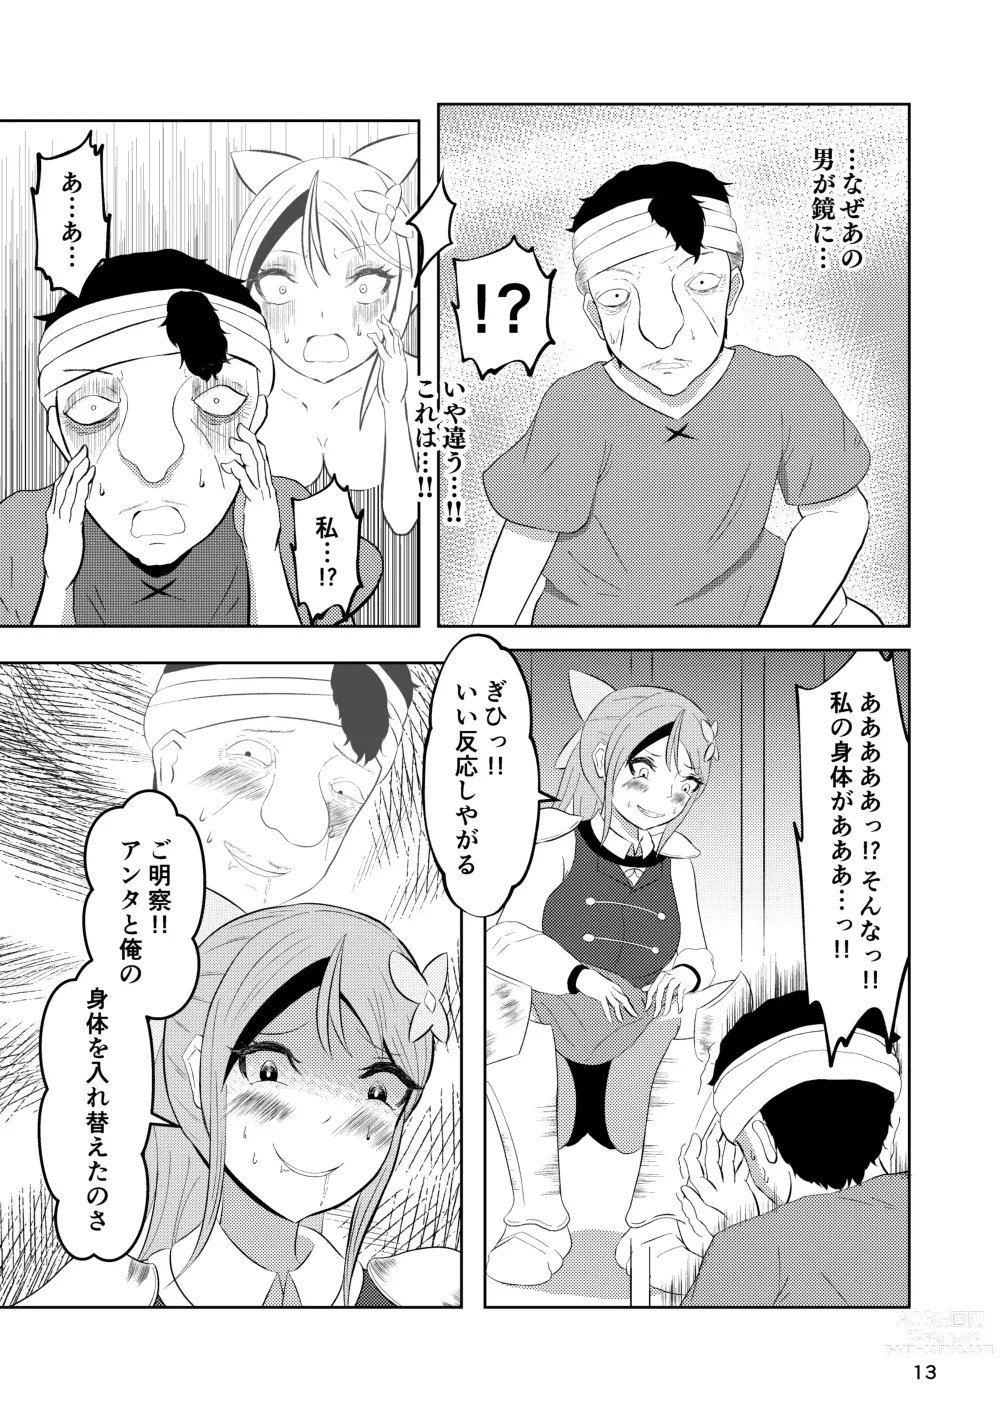 Page 12 of doujinshi Hime to Kishi  wa Nukarumi ni Kawaru